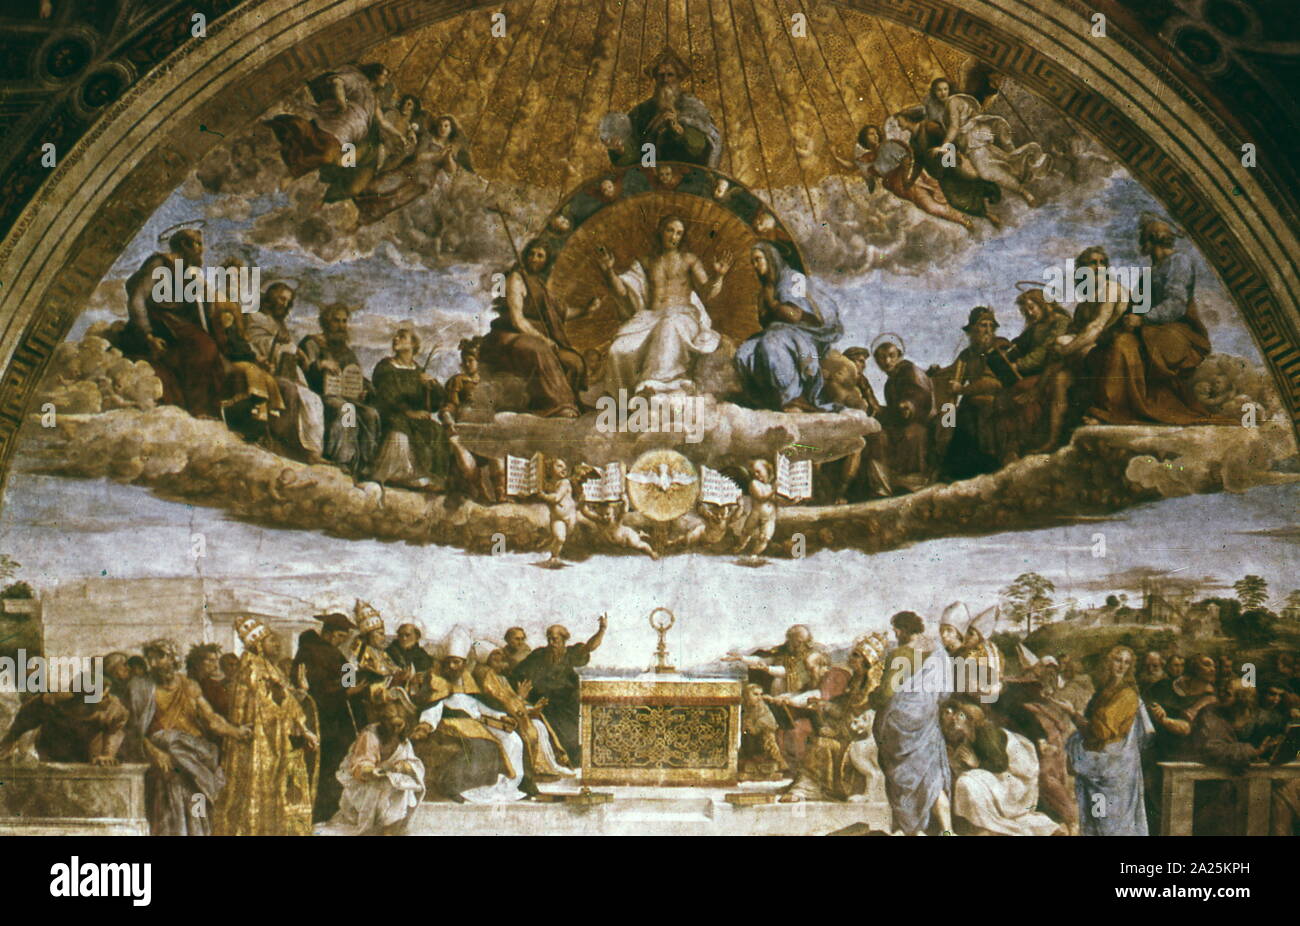 The Disputation of the Sacrament, Fresco g by the Italian Renaissance artist Raphael. Stock Photo